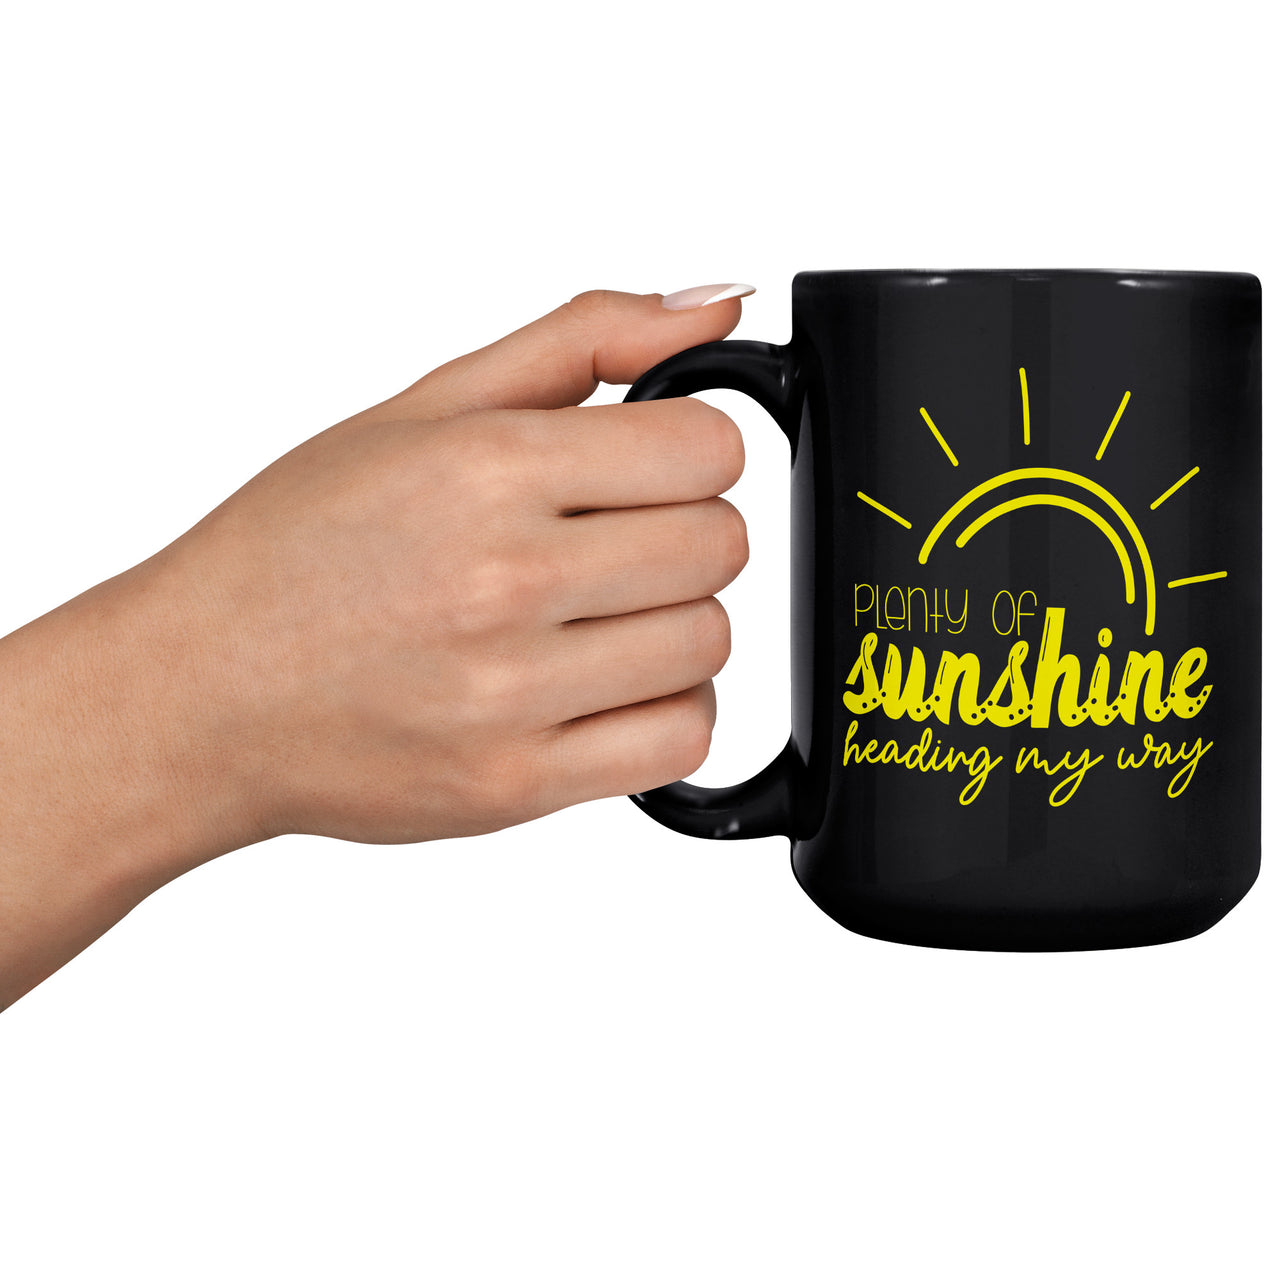 Mug - Plenty Of Sunshine 15 ounce Black (pre-order)